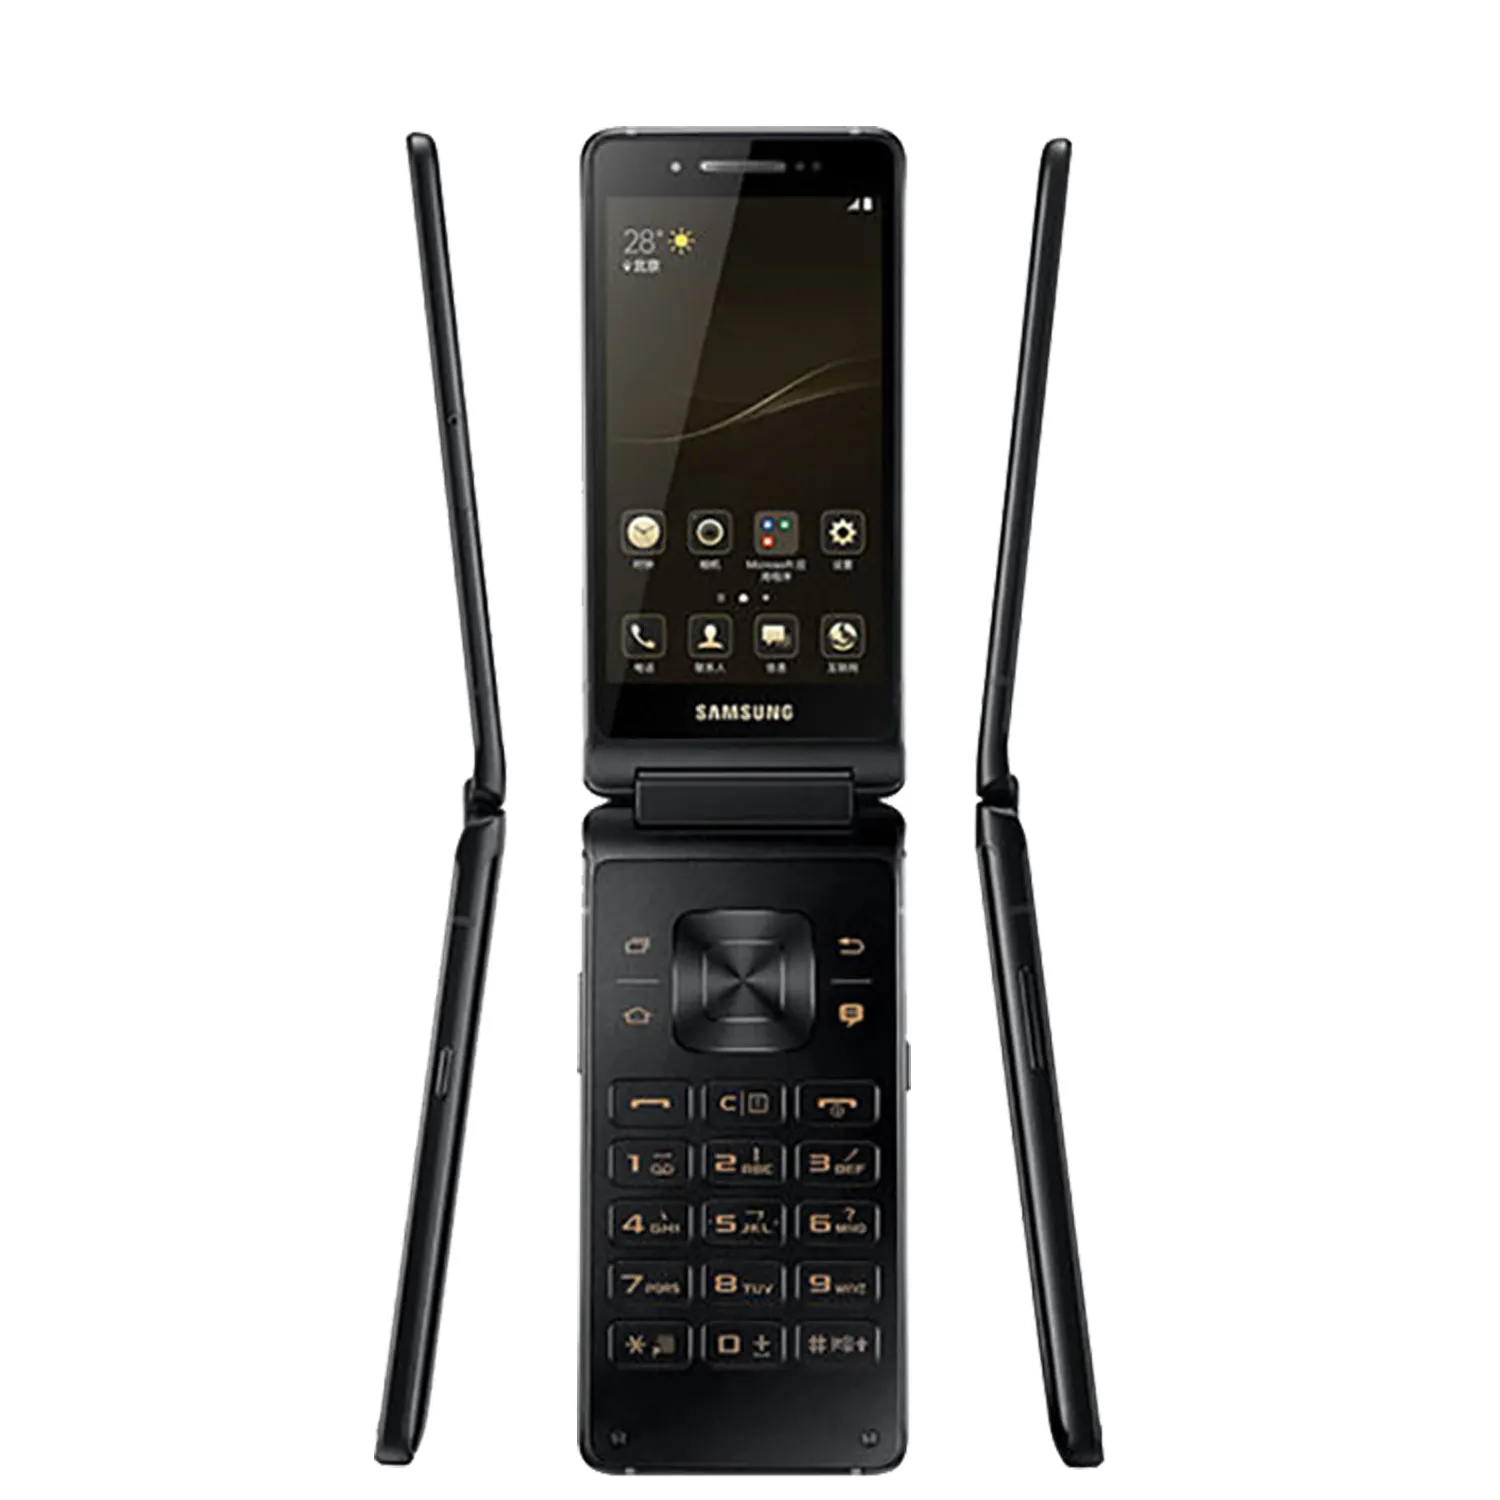 Para Samsung Leader 8 G9298 4G LTE teléfono móvil 4,2 pulgadas AMOLED teléfono inteligente Snapdragon 821 Quad Core Flip Android teléfono celular